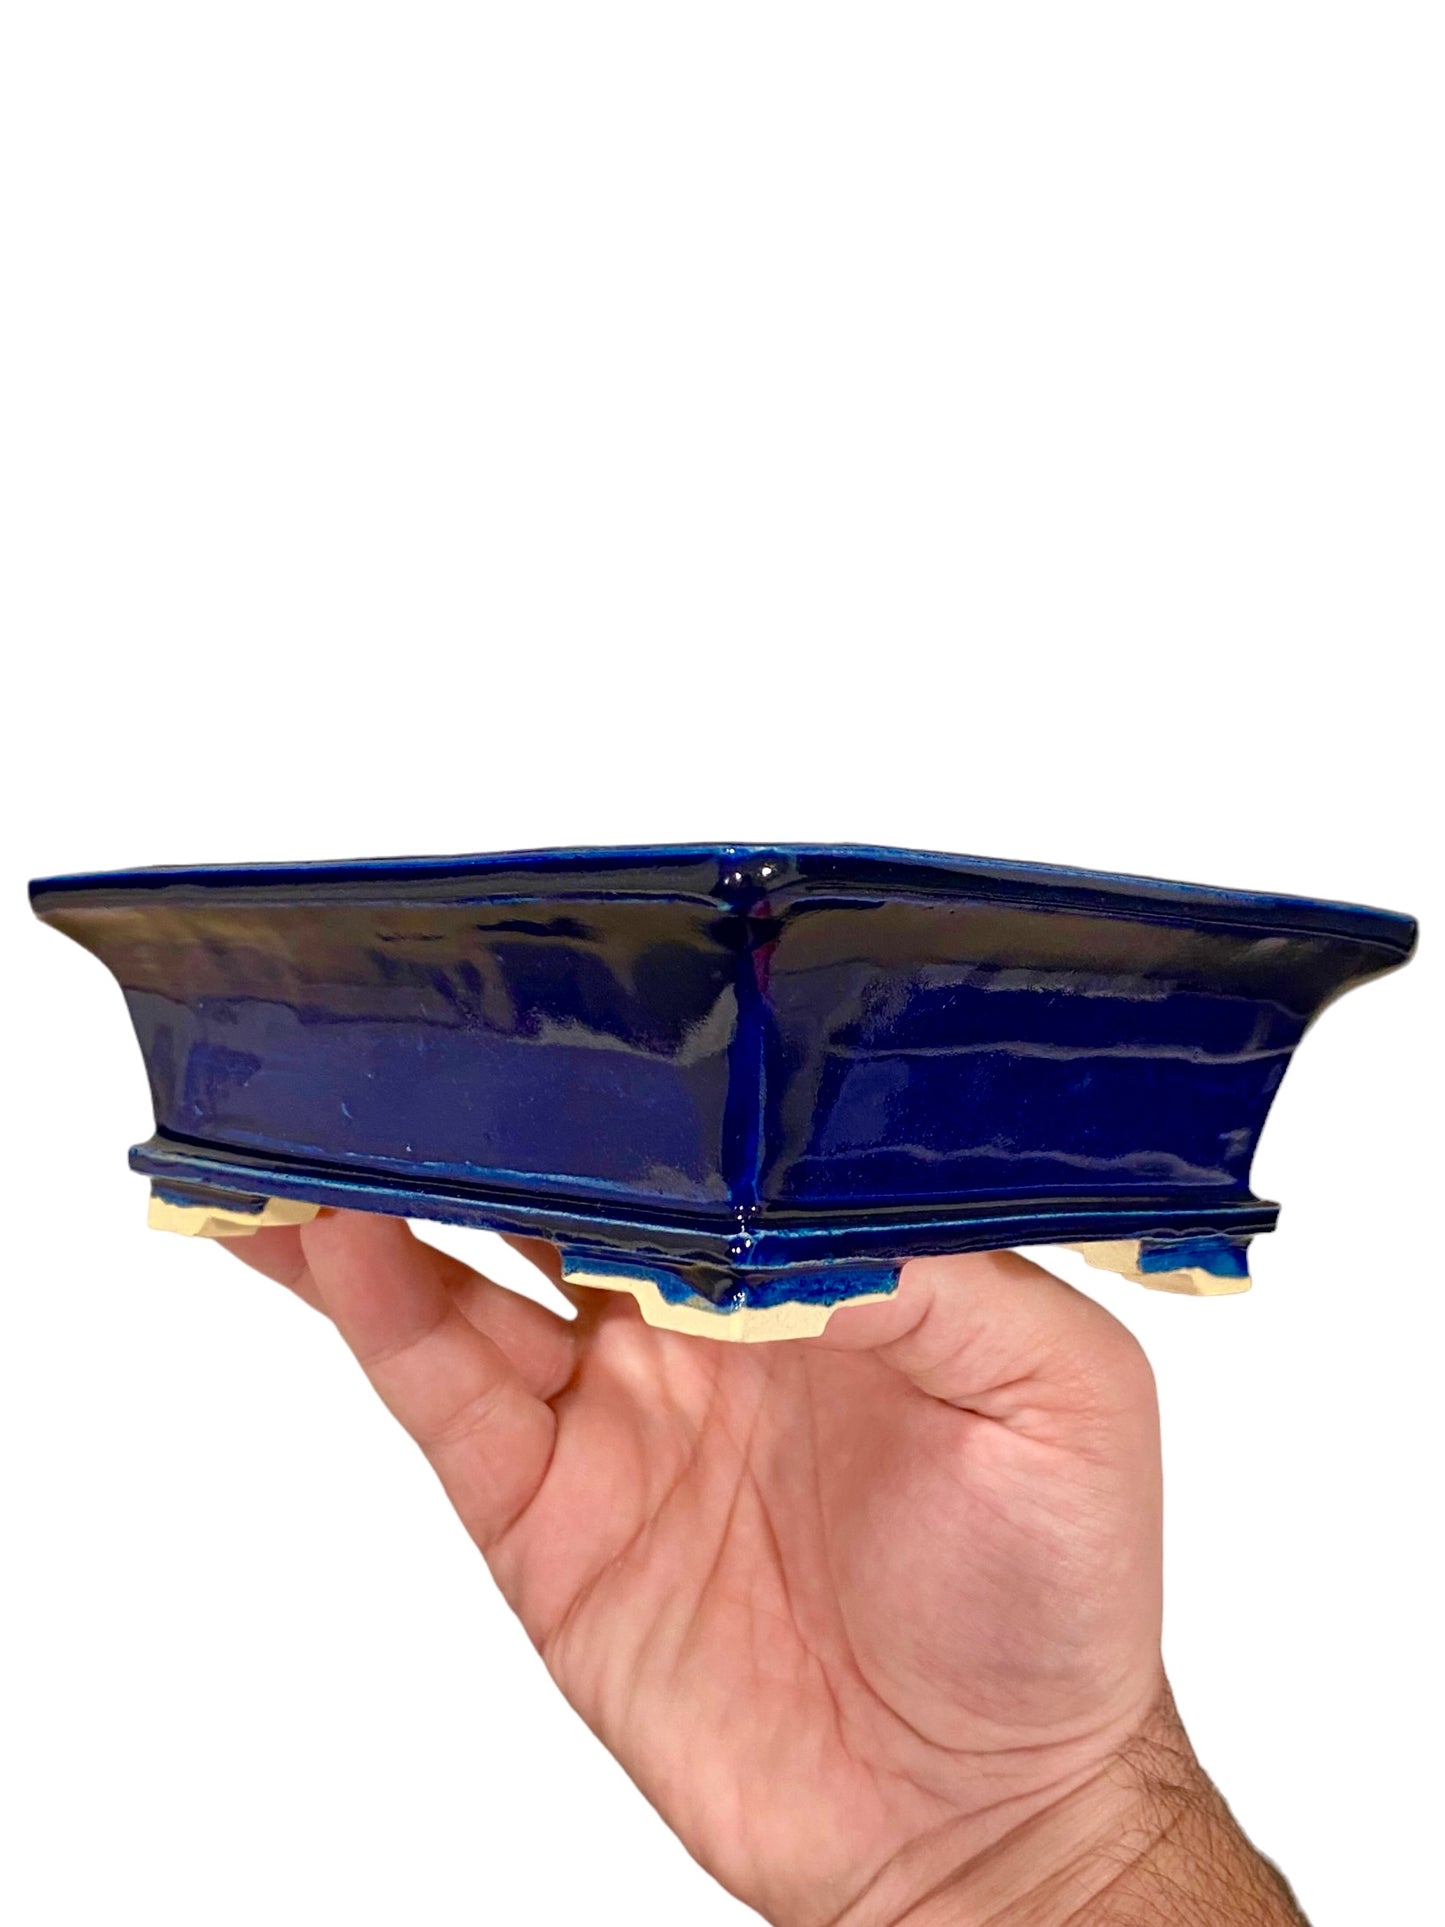 Fukuda Keiun - Mirror Blue Glazed Rectangle Bonsai Pot